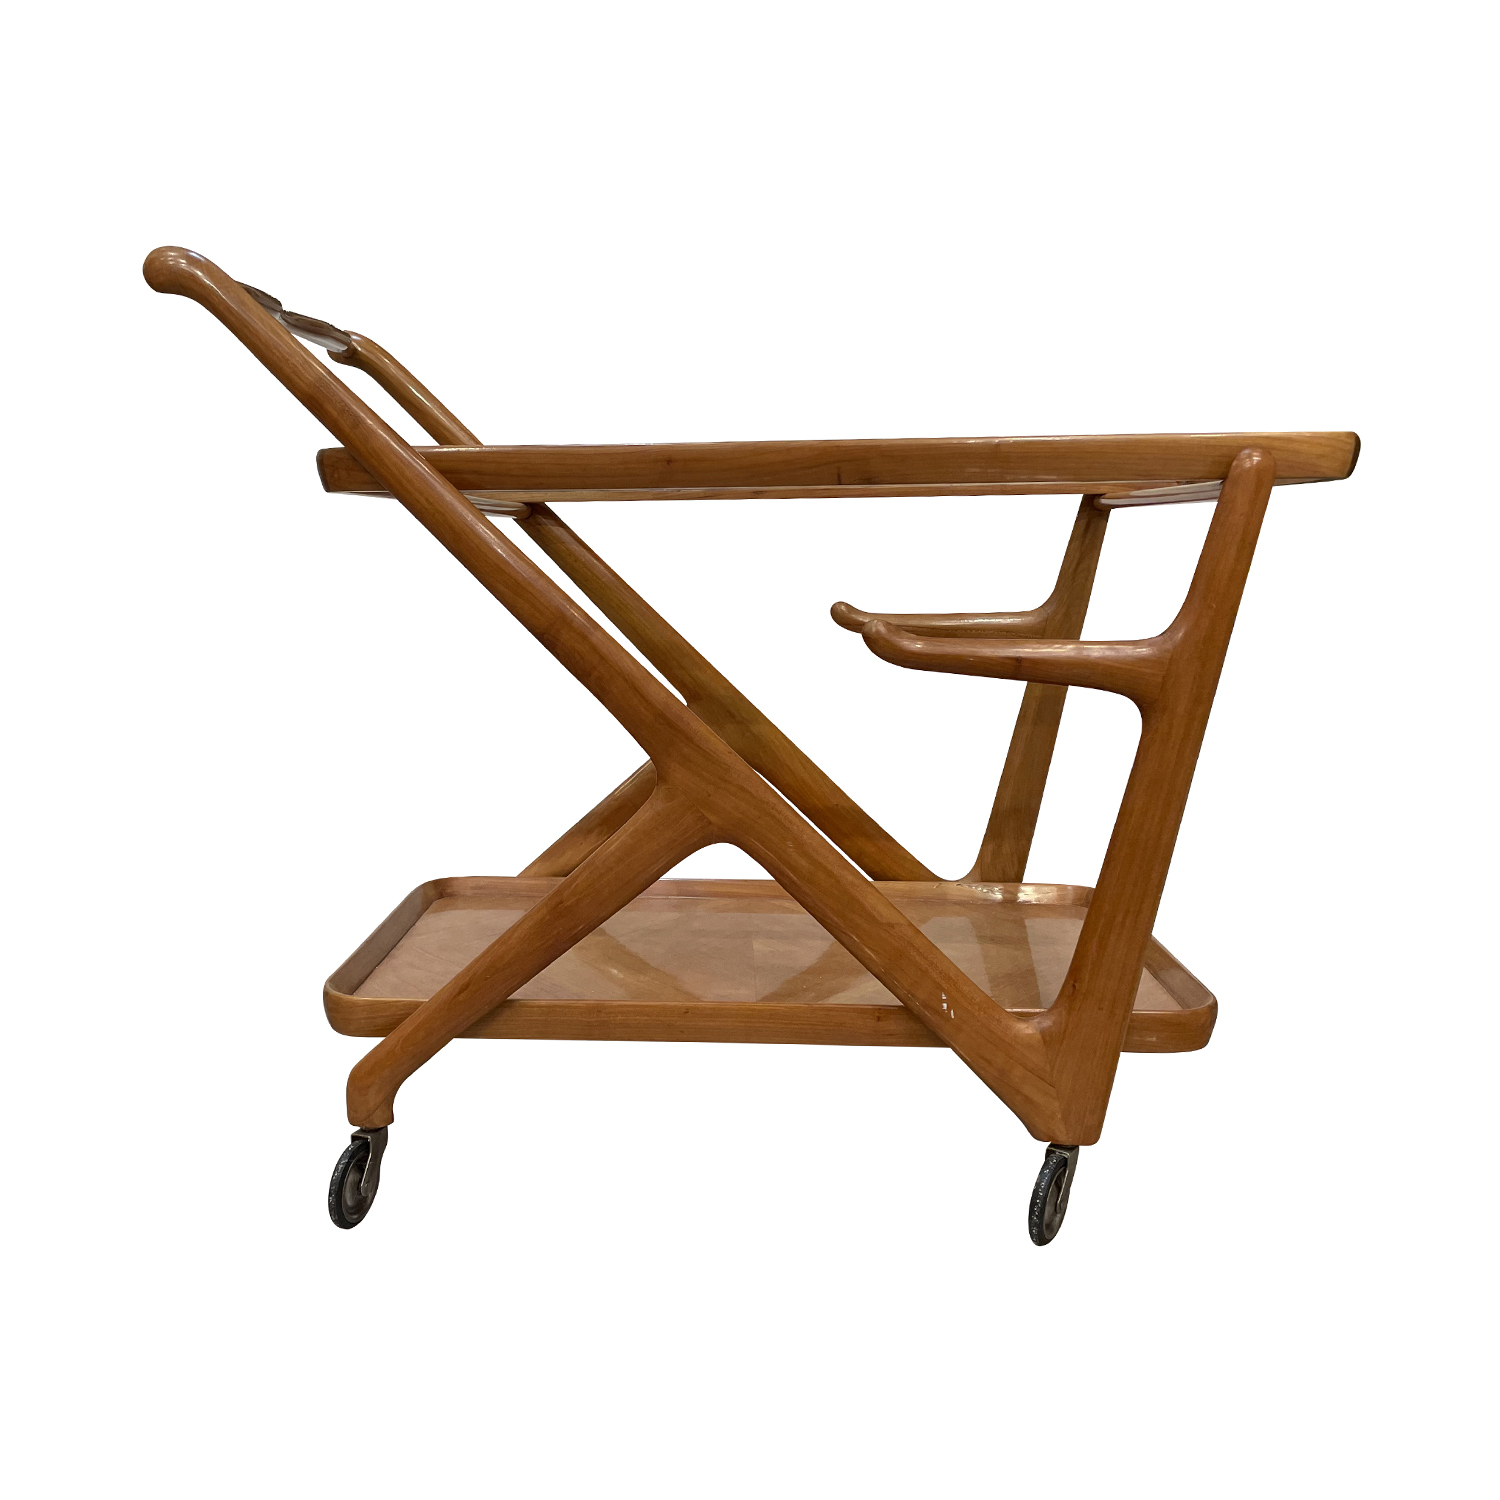 A vintage Mid-Century modern Italian wooden bar cart produced by Cassina.